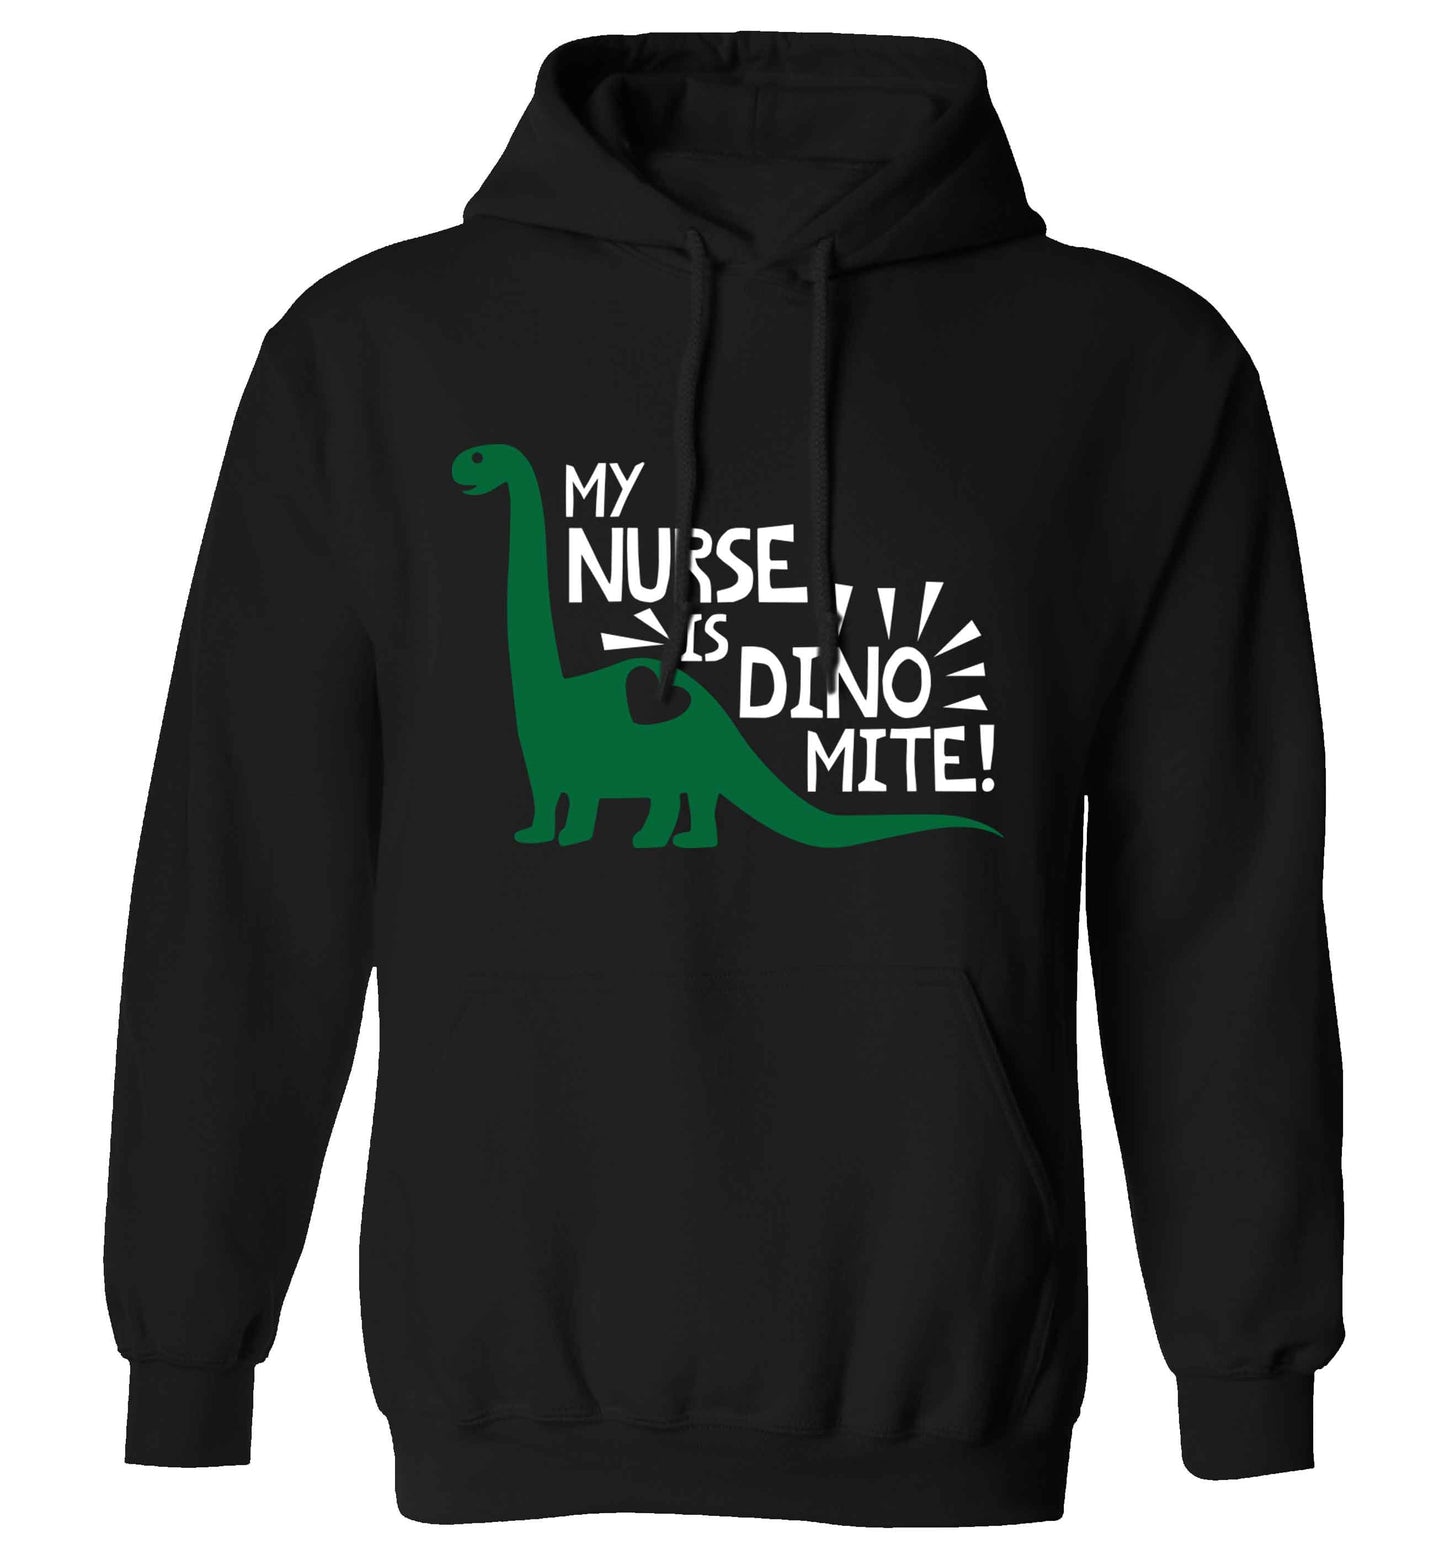 My nurse is dinomite! adults unisex black hoodie 2XL